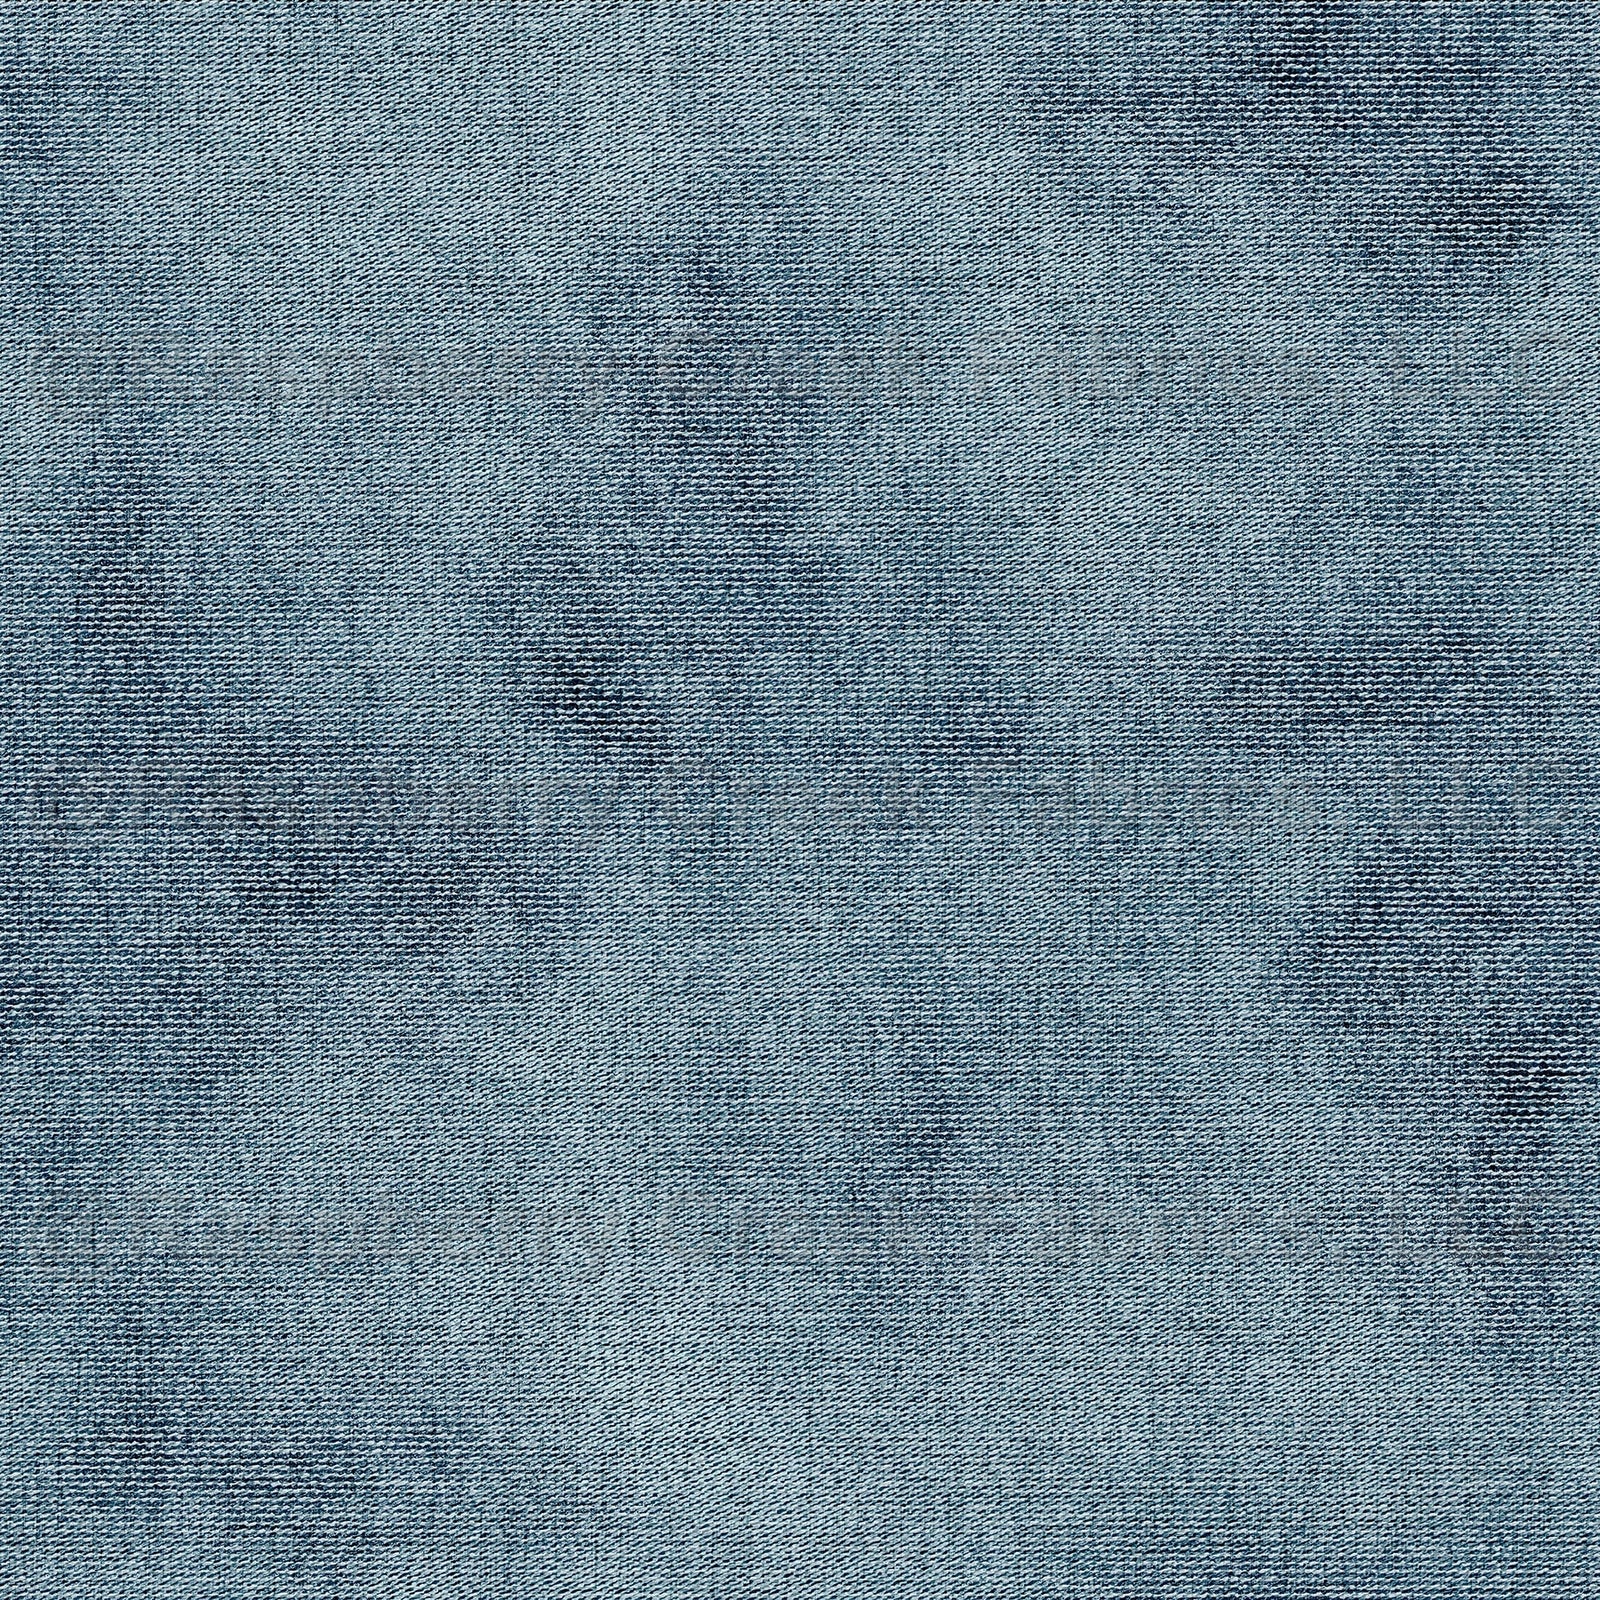 Blue Jean Baby Faux Denim Print - Light Wash Bleached Look (indigo